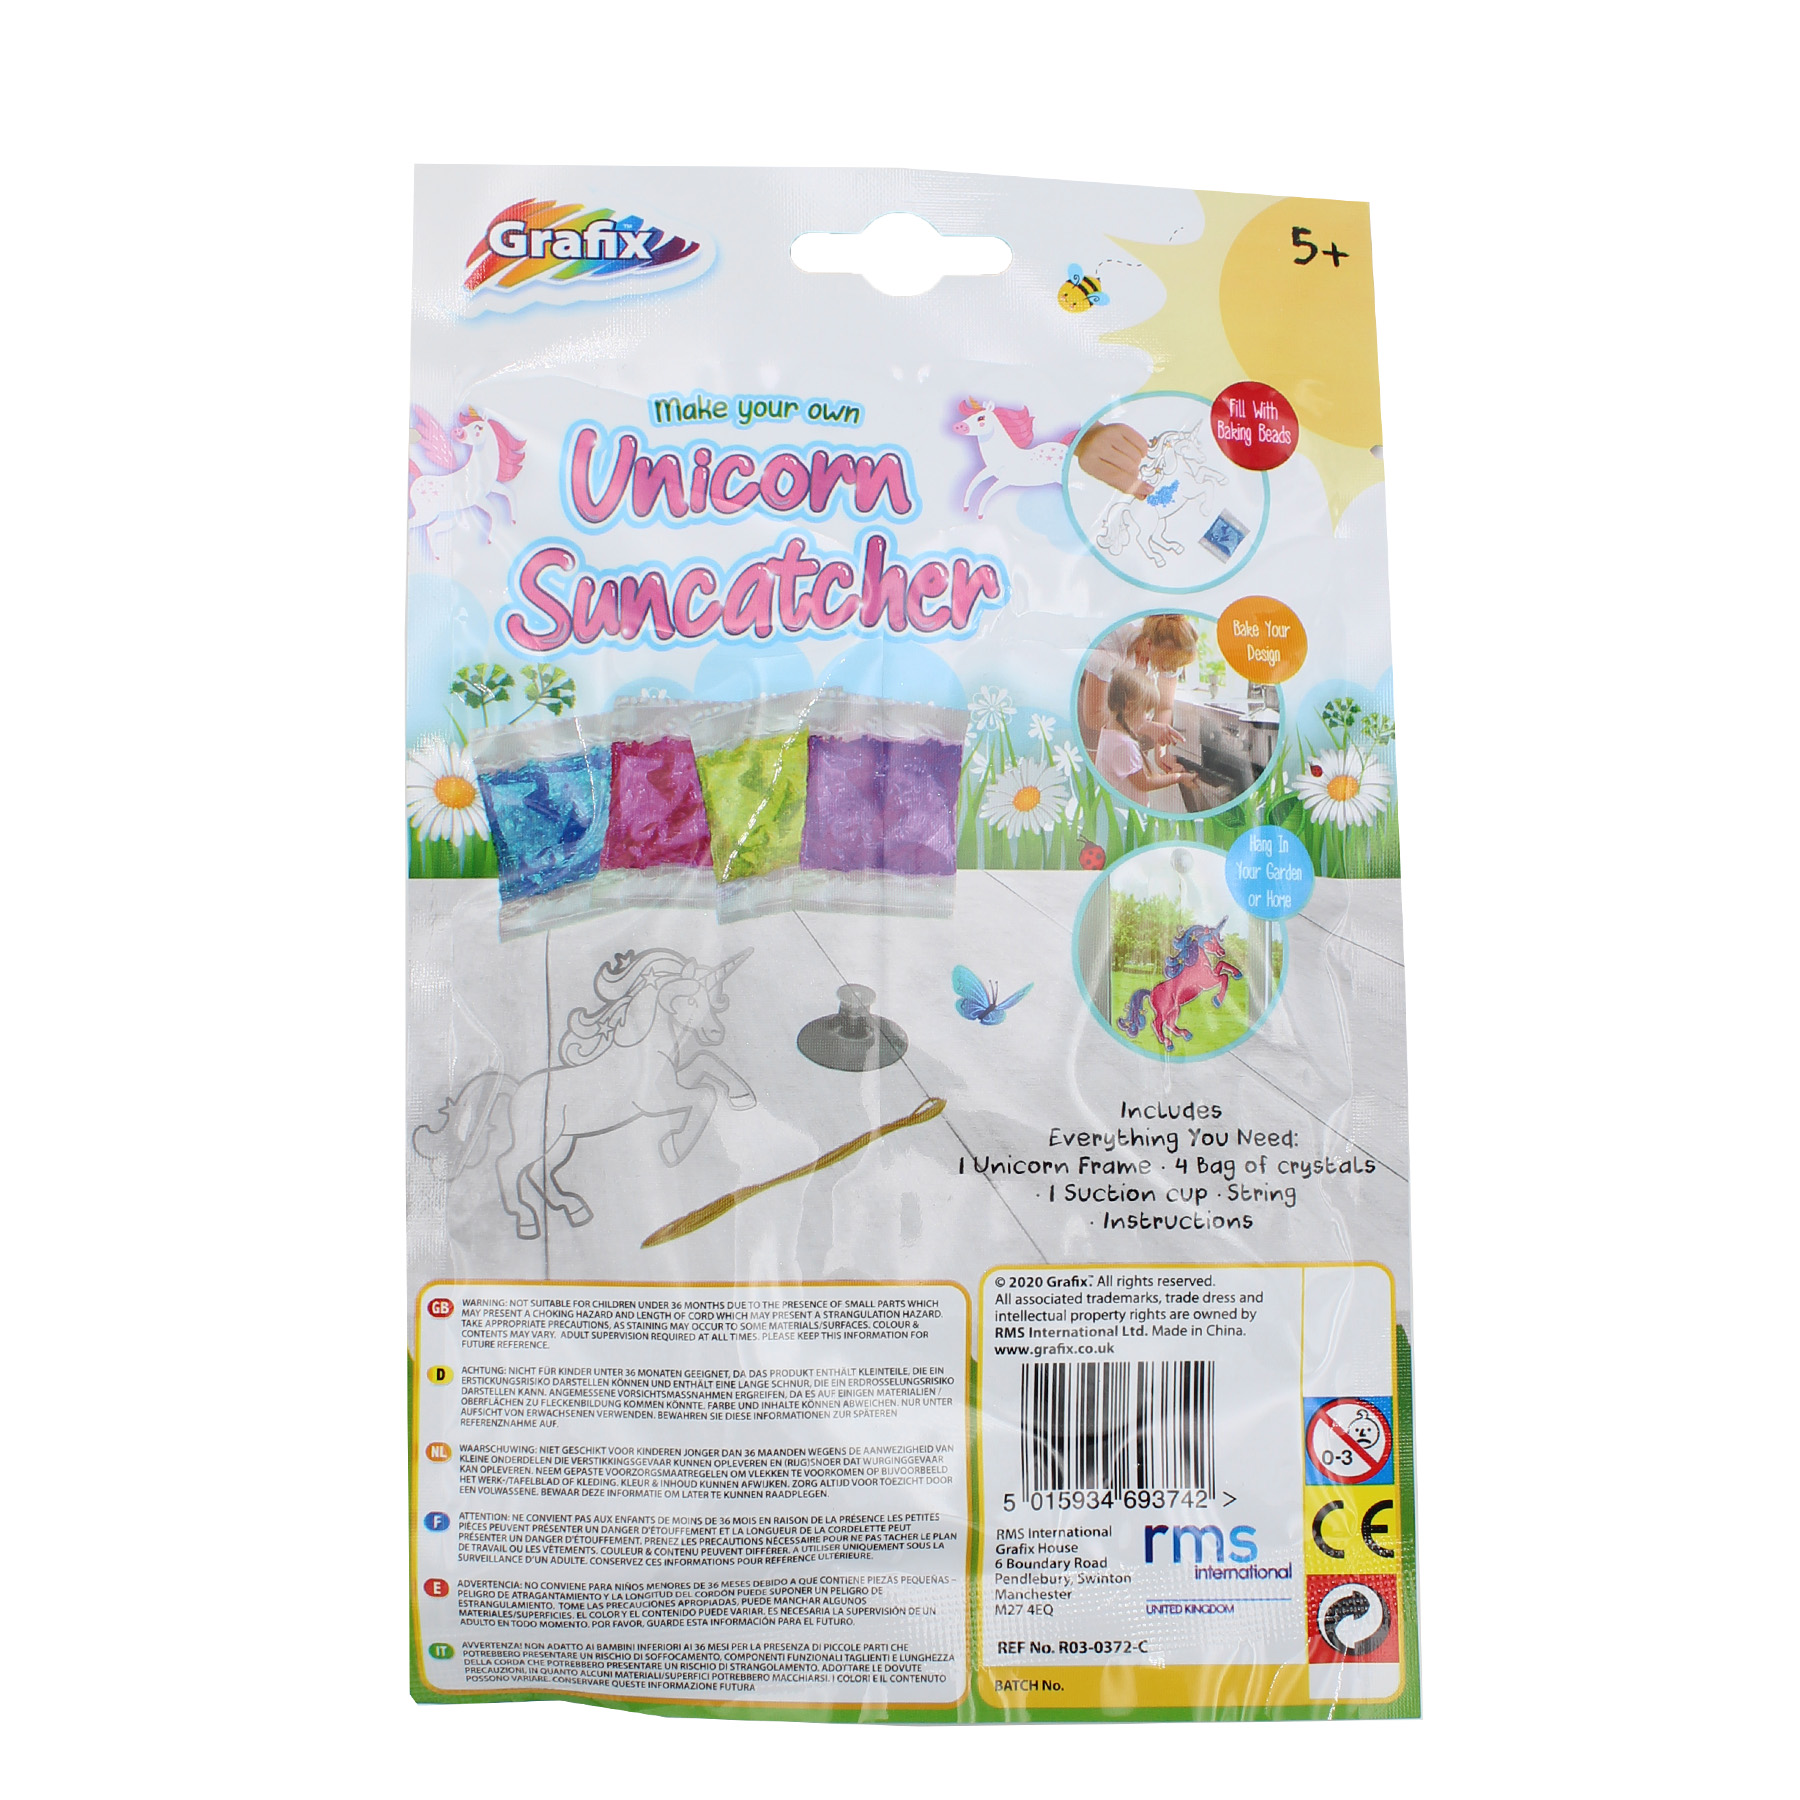 Make Your Own Suncatcher - Children's Art / Craft - Unicorn Design